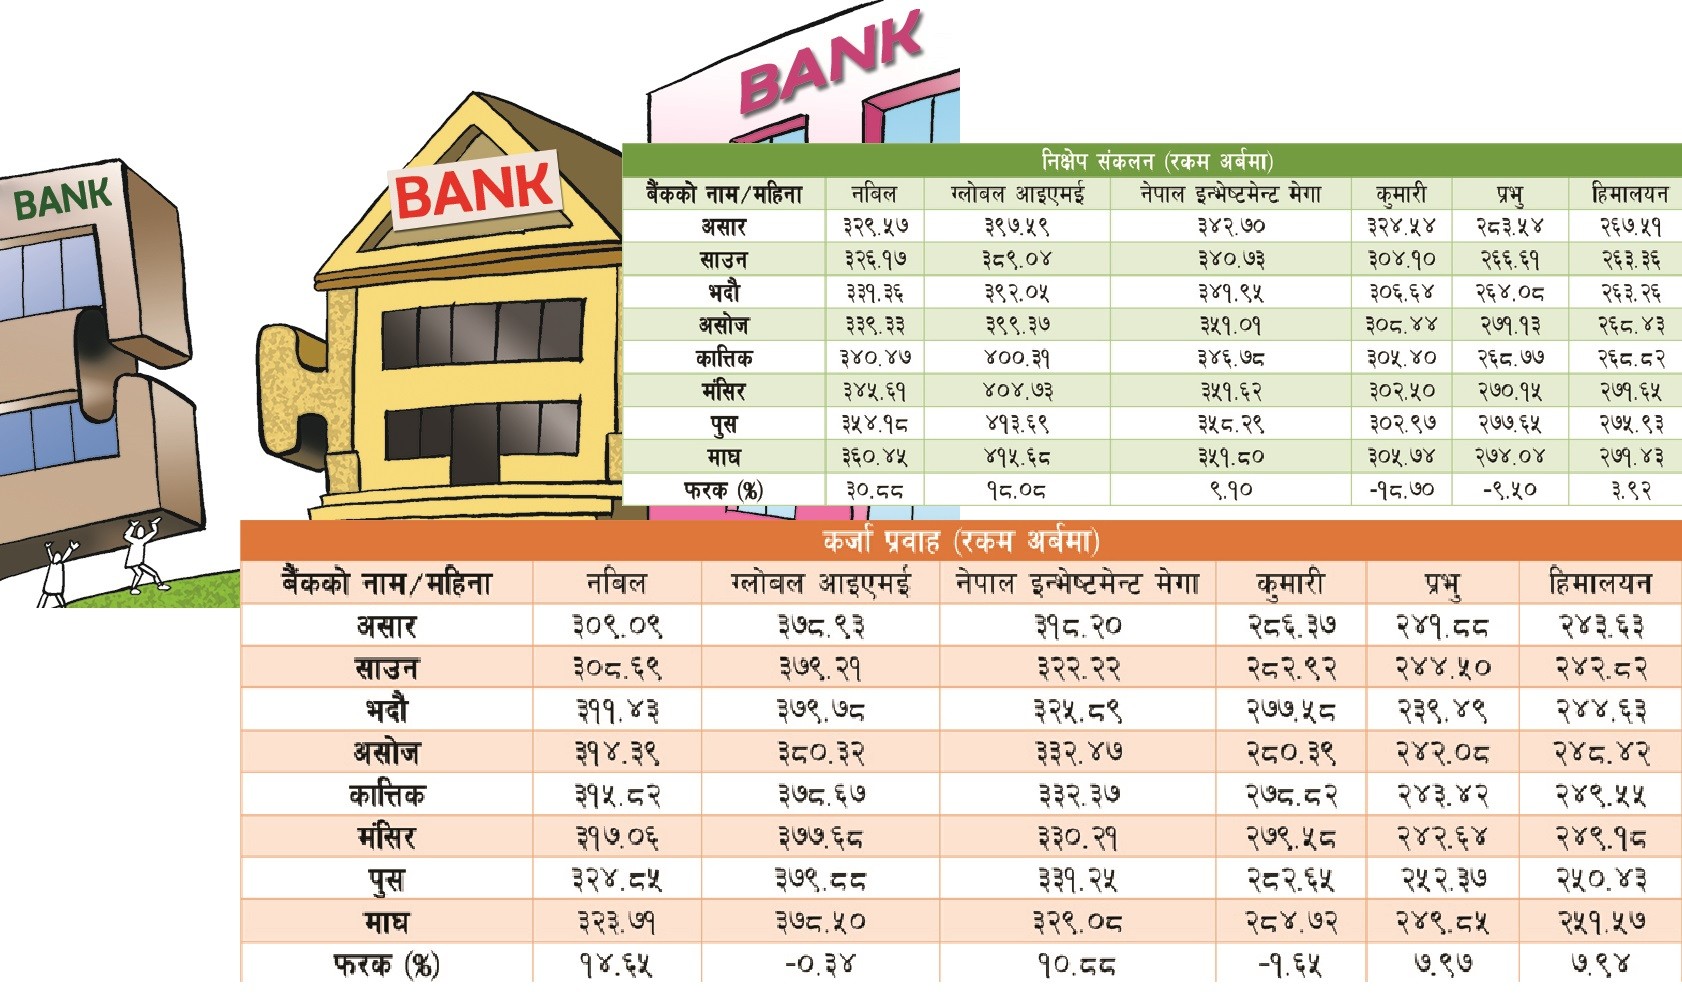 Global IME Bank aggressive in business expansion  followed by Nabil, NIMB, Kumari, Prabhu and Himalayan Bank